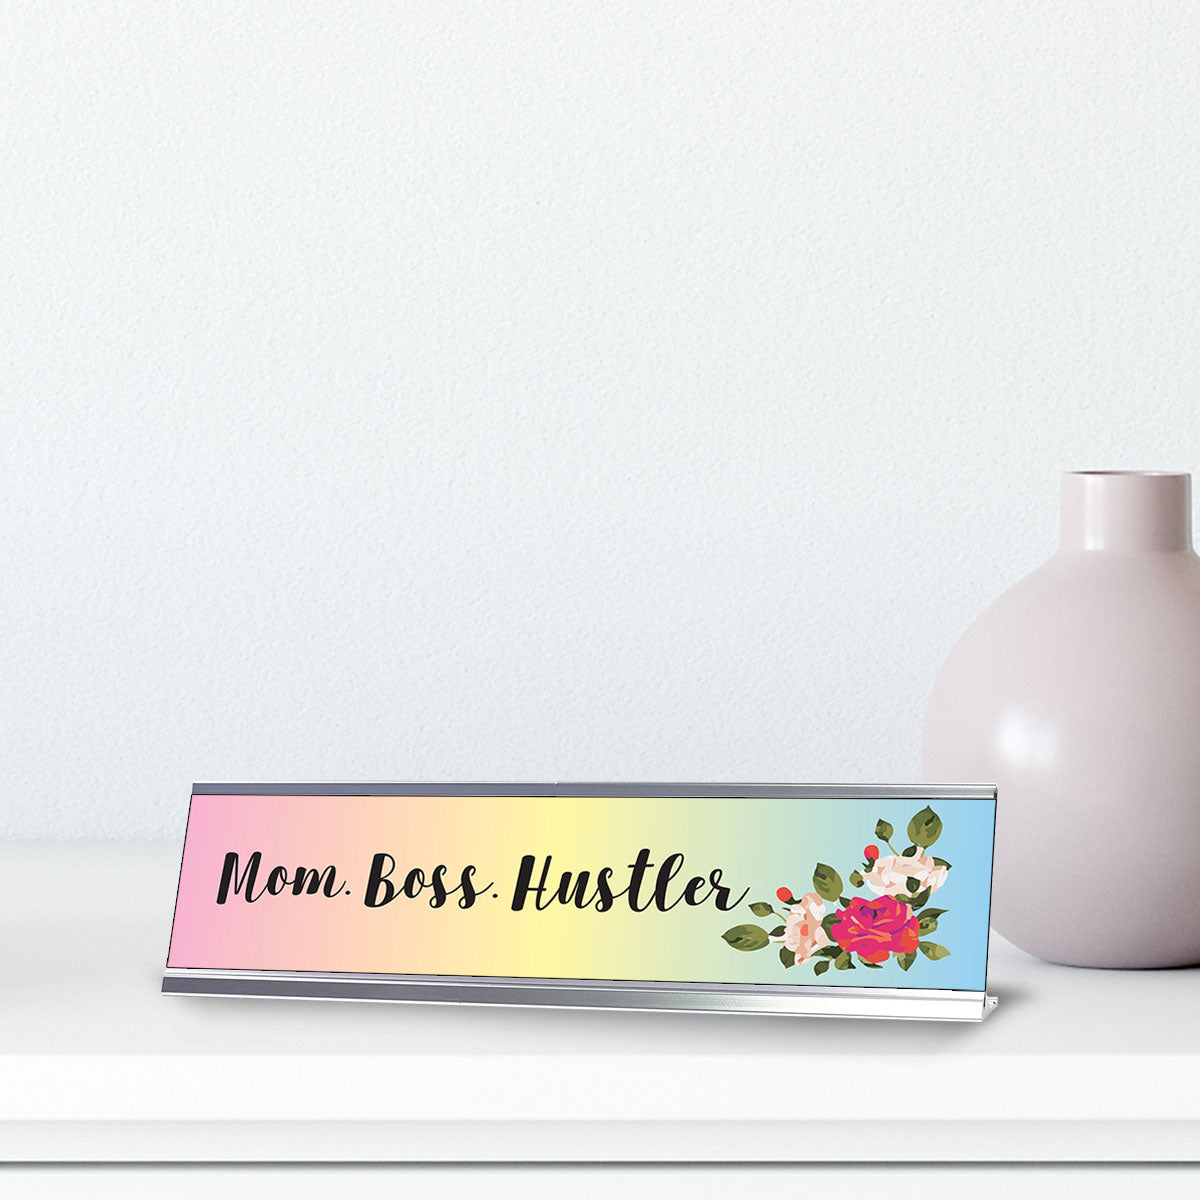 Mom. Boss. Hustler, Floral Designer Series Desk Sign Nameplate (2 x 8")